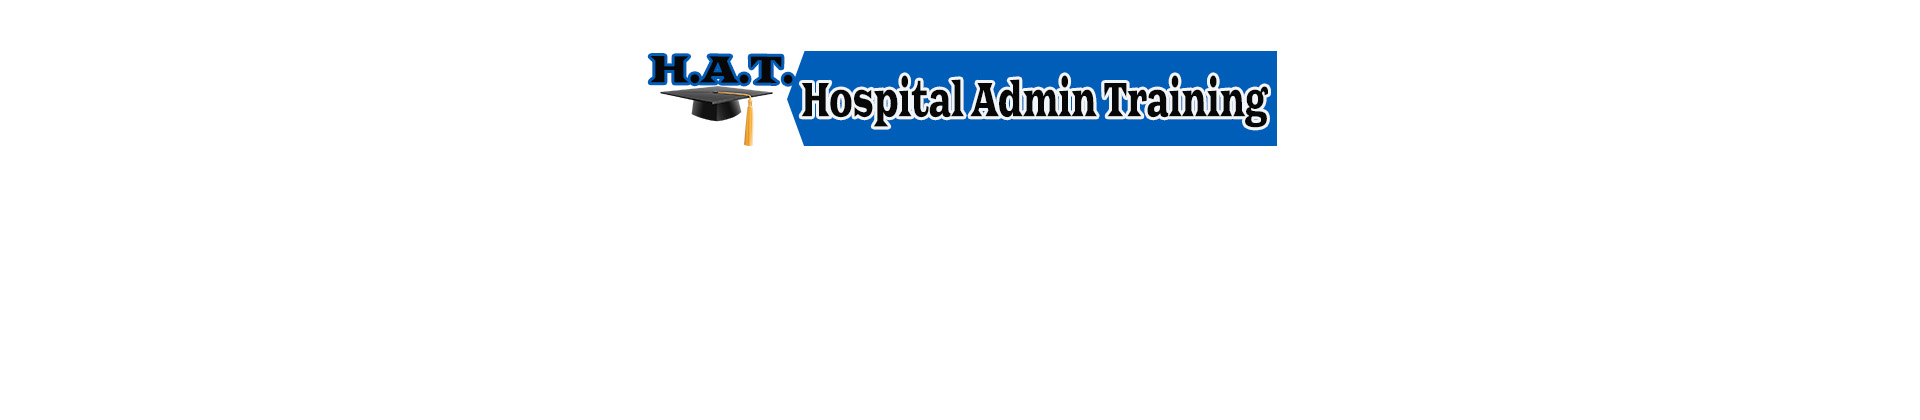 Hospital Admin Training